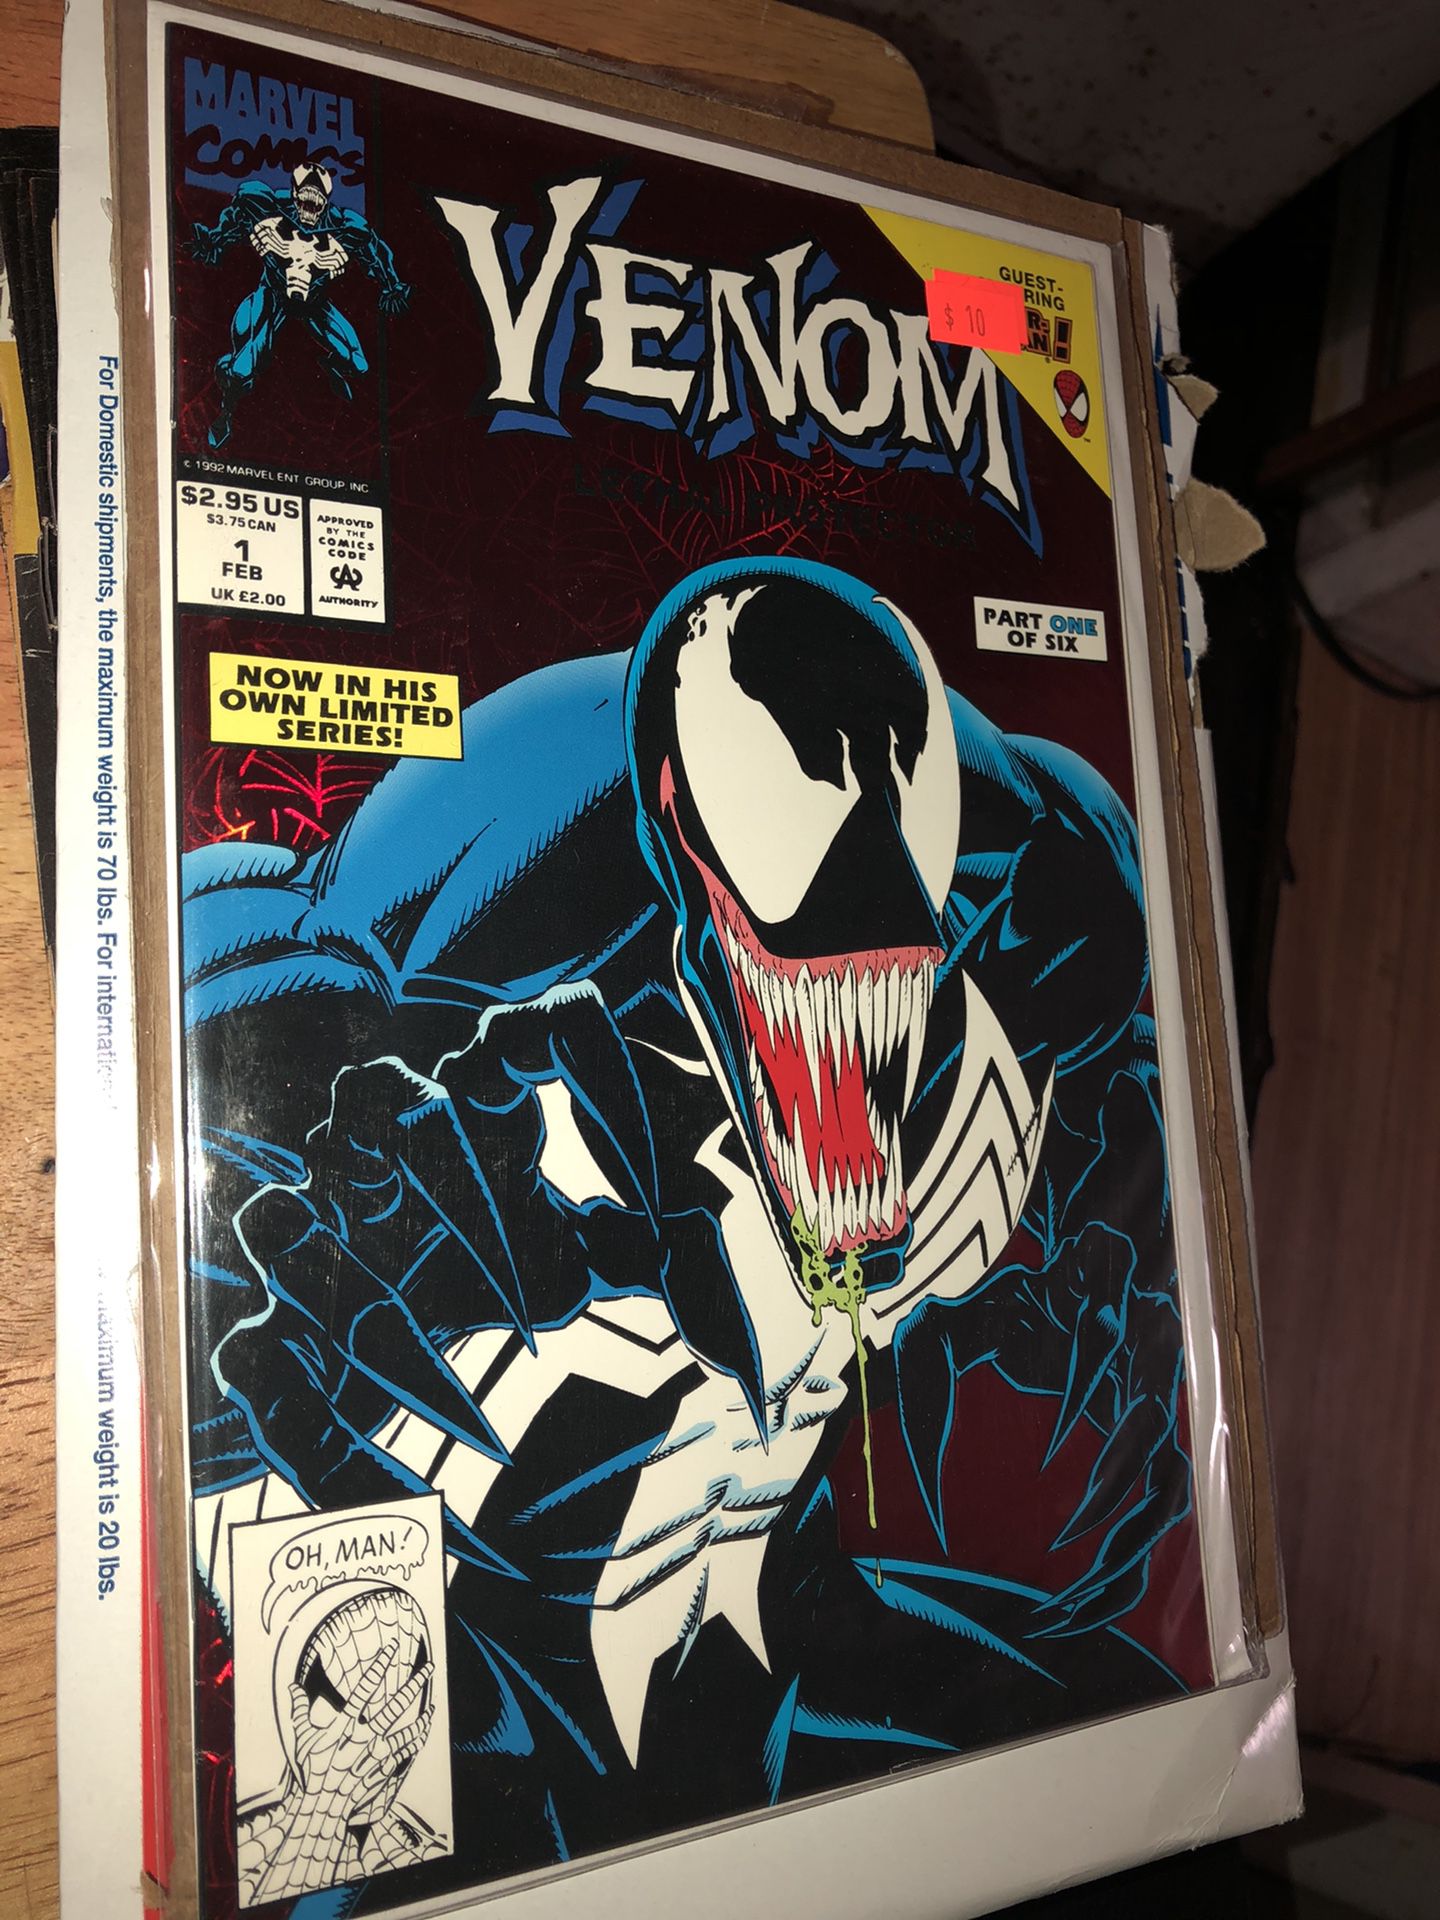 Venom #1 holographic foil cover